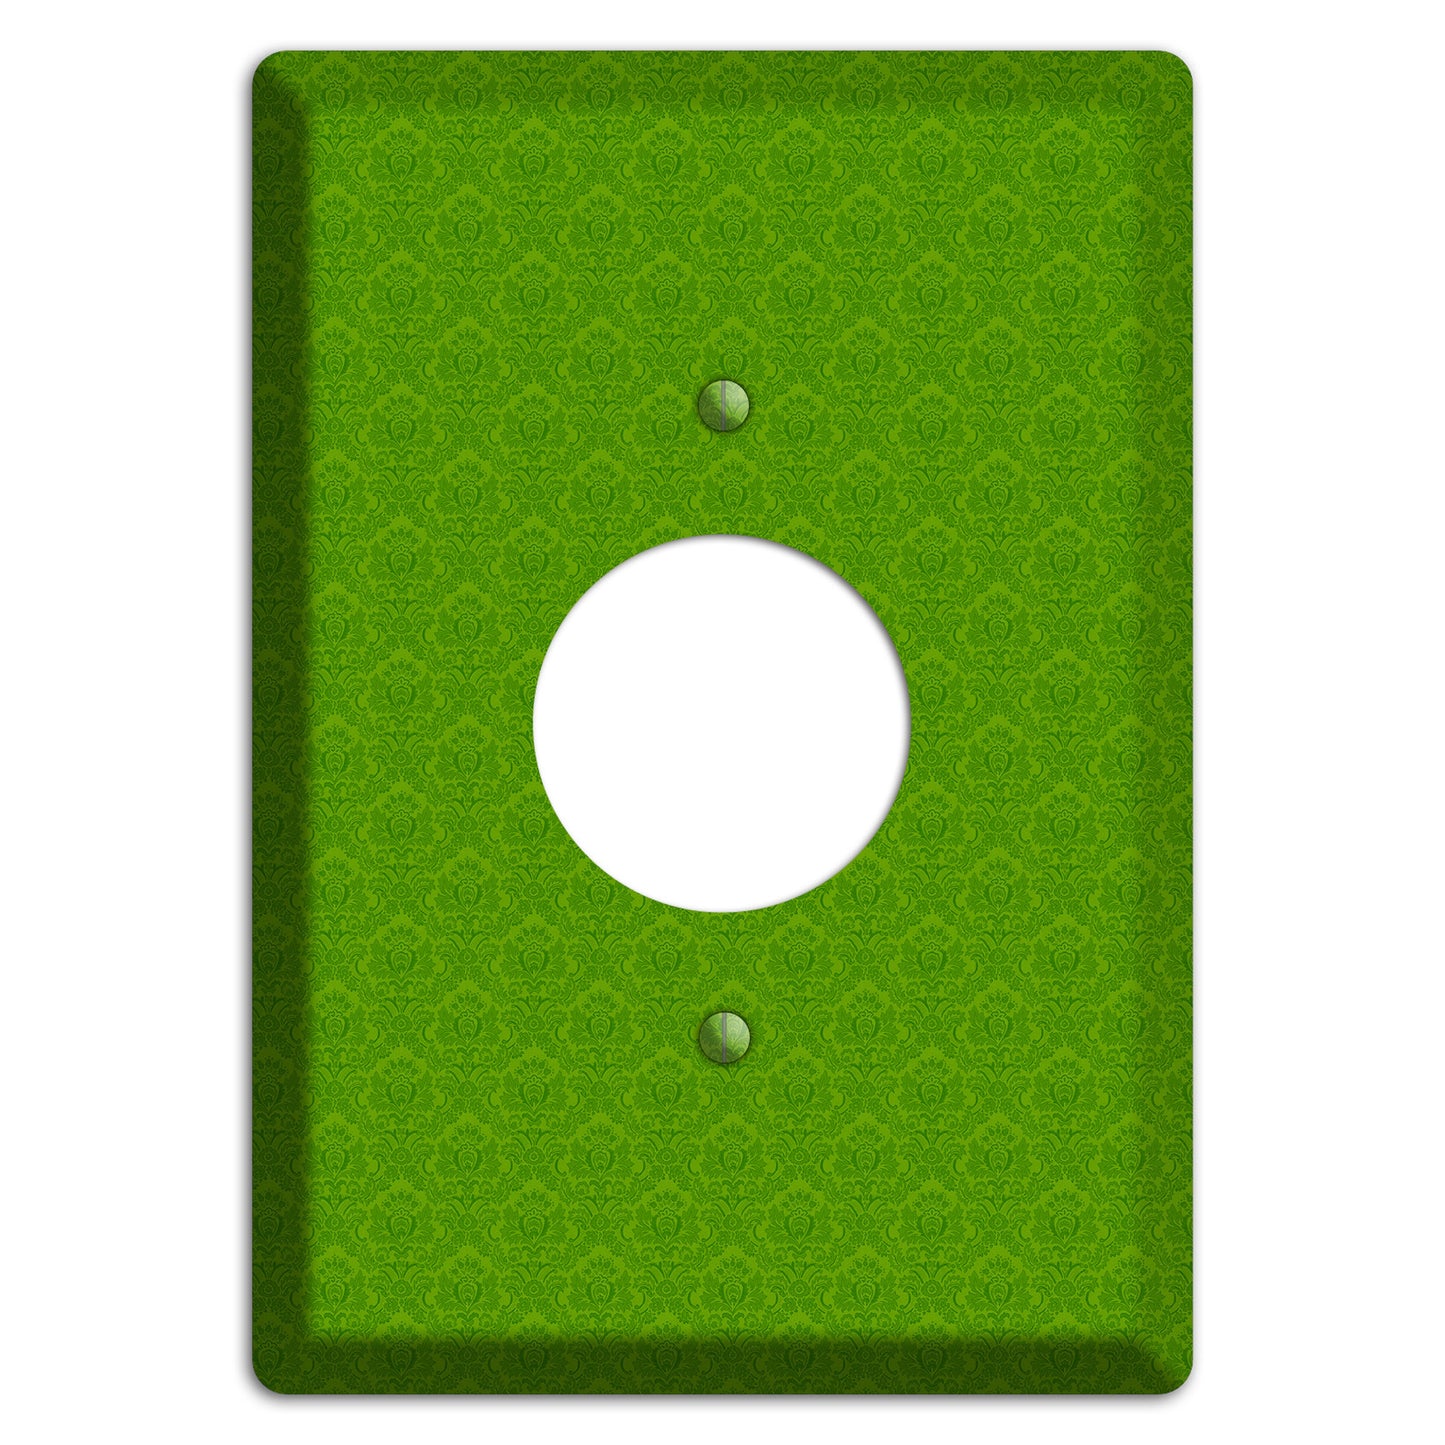 Green Cartouche Single Receptacle Wallplate